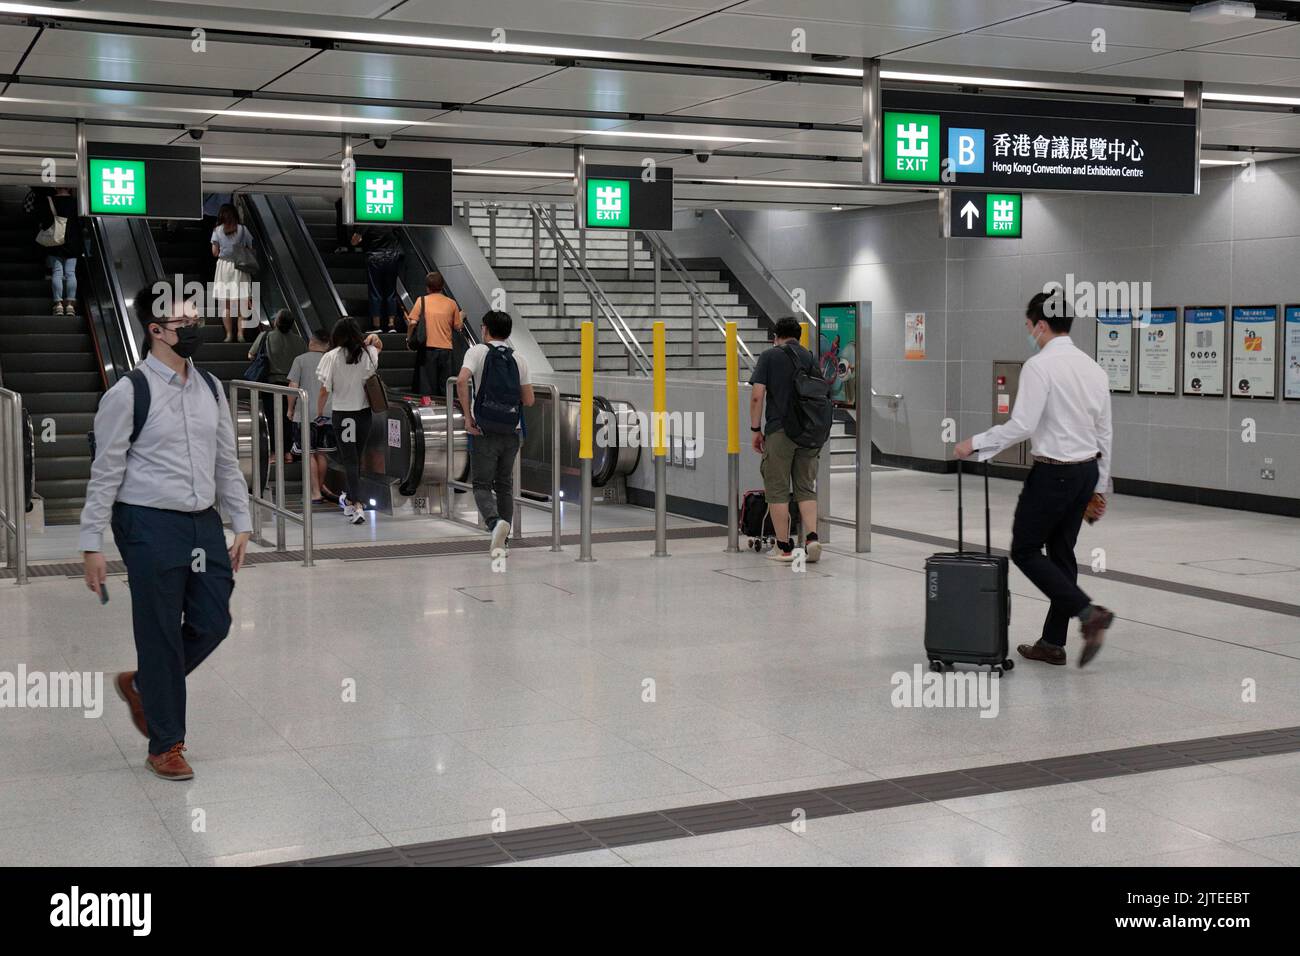 Vista de pasajeros en escaleras mecánicas, estación del centro de exposiciones MTR, salida B, Wanchai North, Hong Kong Foto de stock